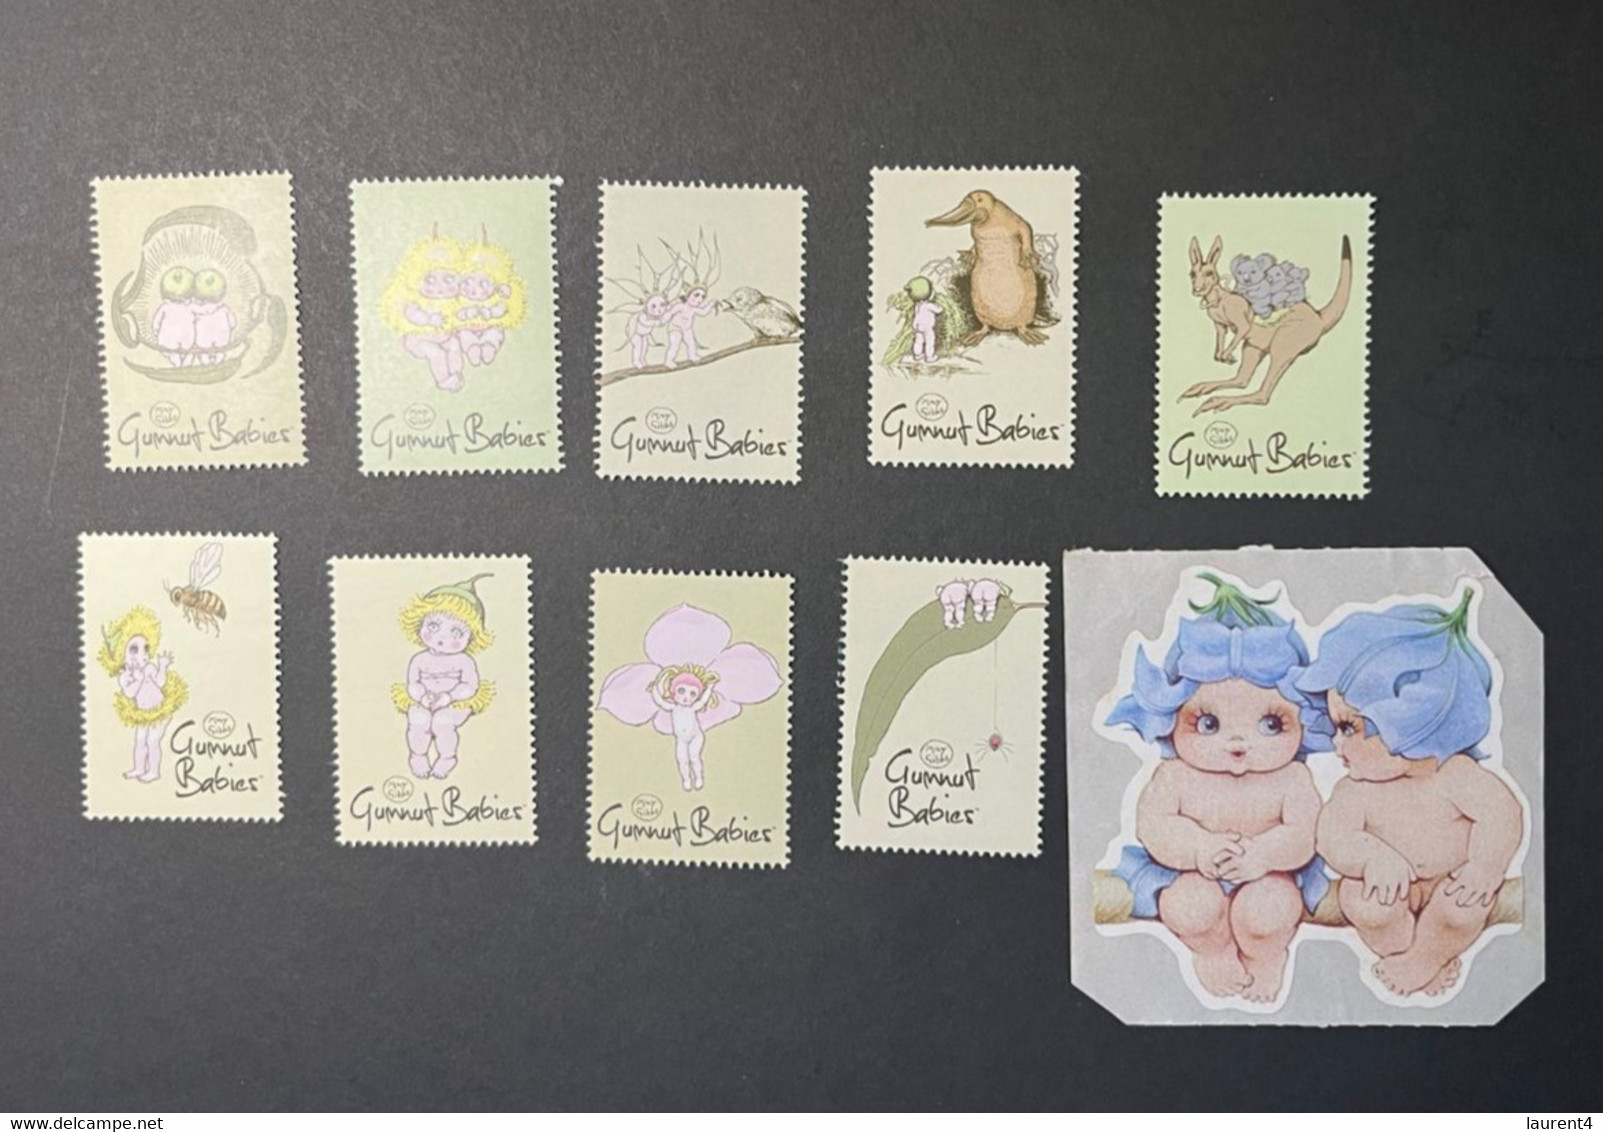 (STAMPS 7-1-2023) Australia - May Gibbs - Gumnut Babies Cinderella (TAG) 9 (mint) As Seen On Scan + 1 Sticker - Cinderelas